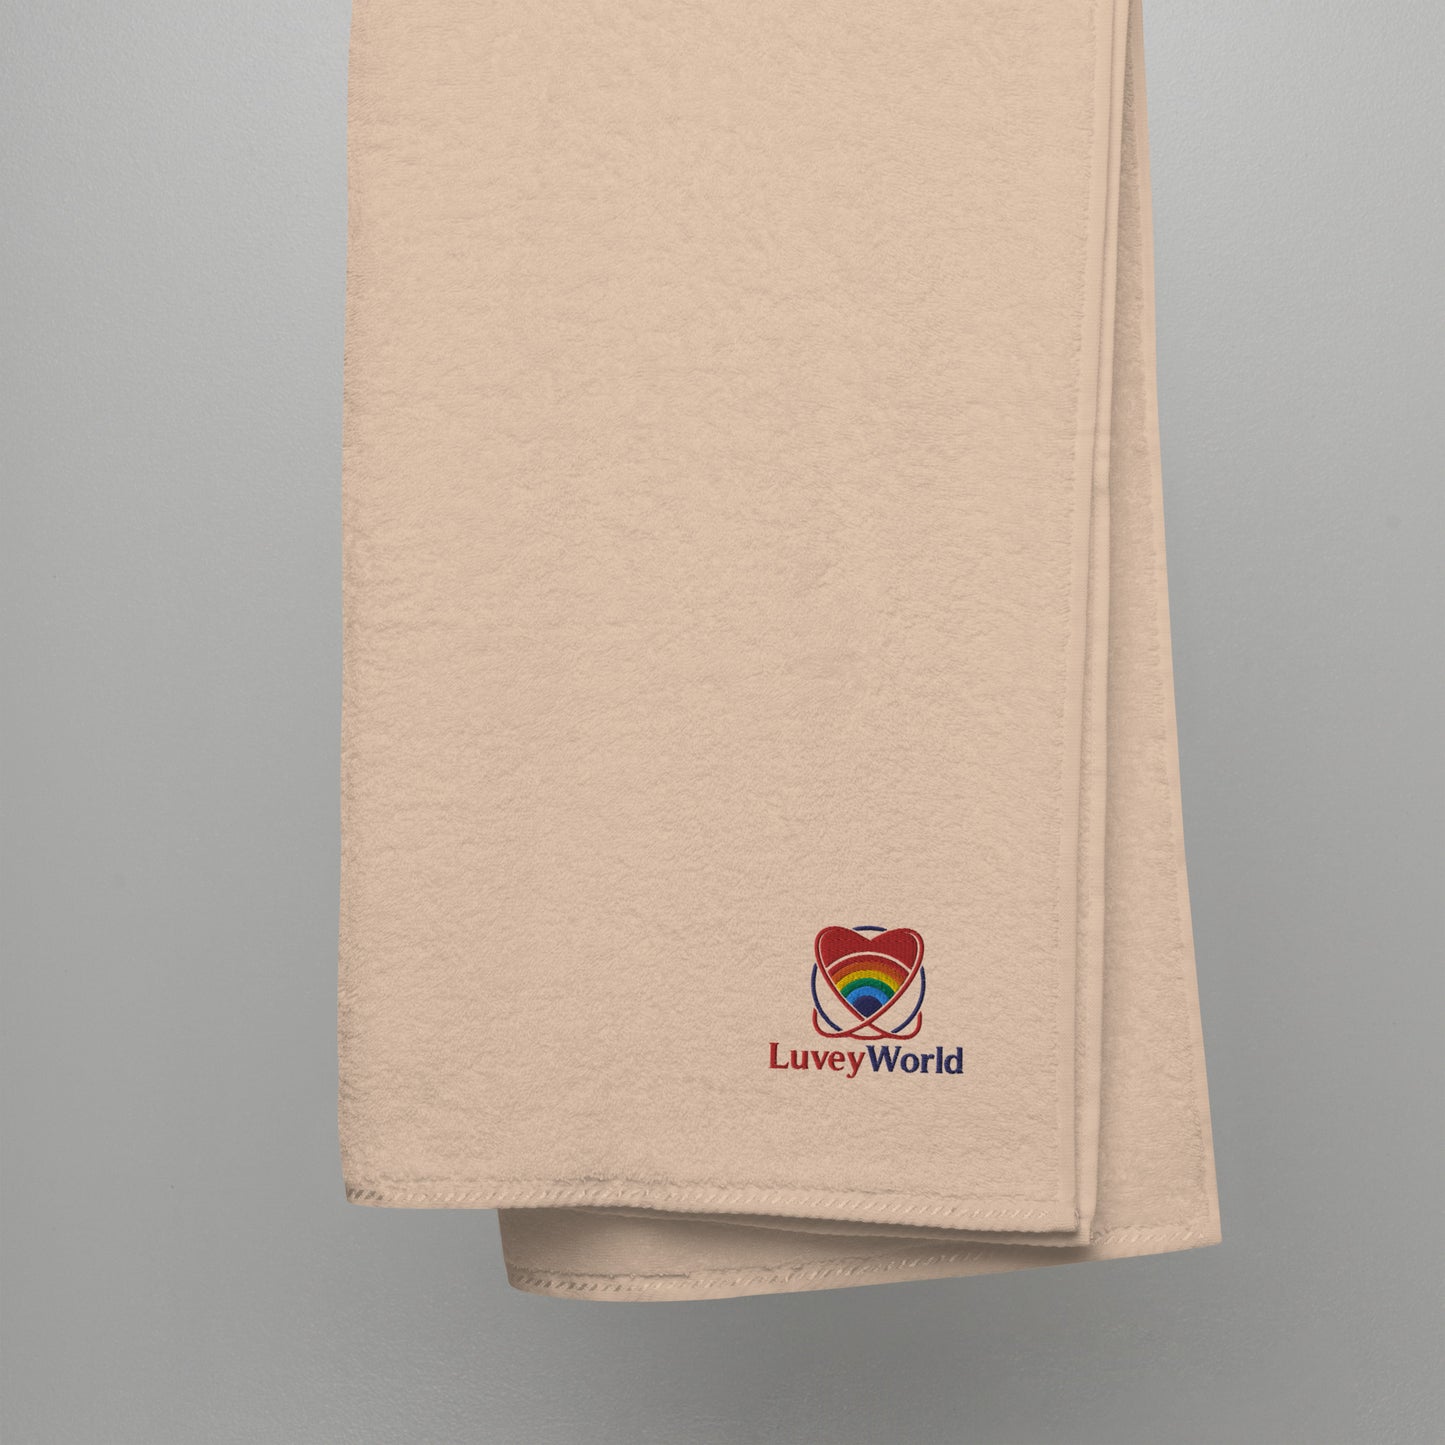 LuveyWorld cotton towel